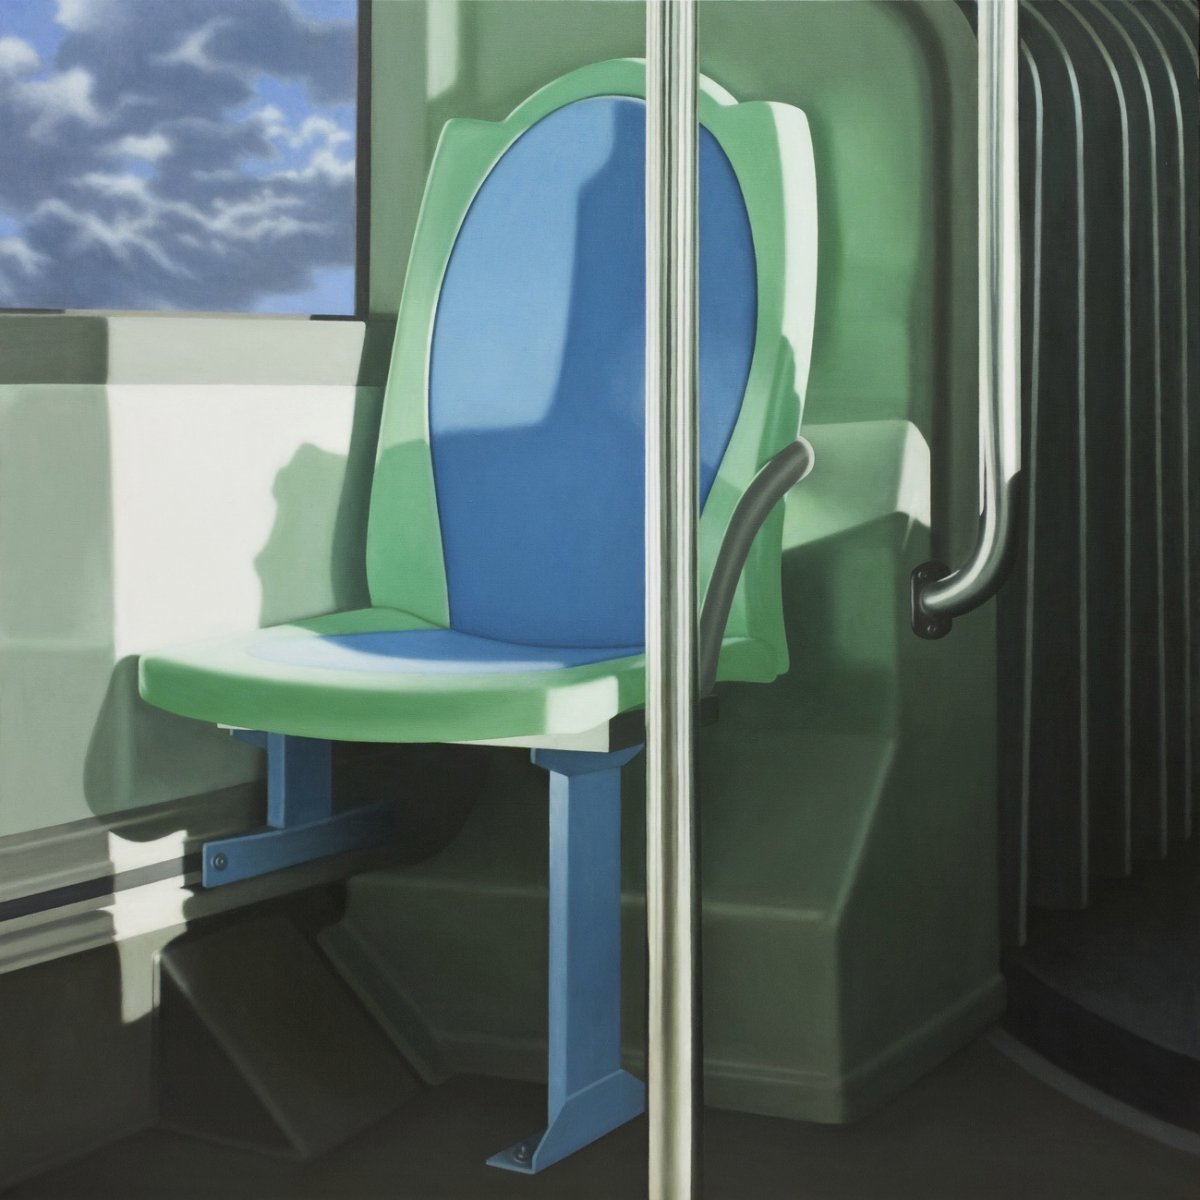 Bus Seat - Ronald Bowen